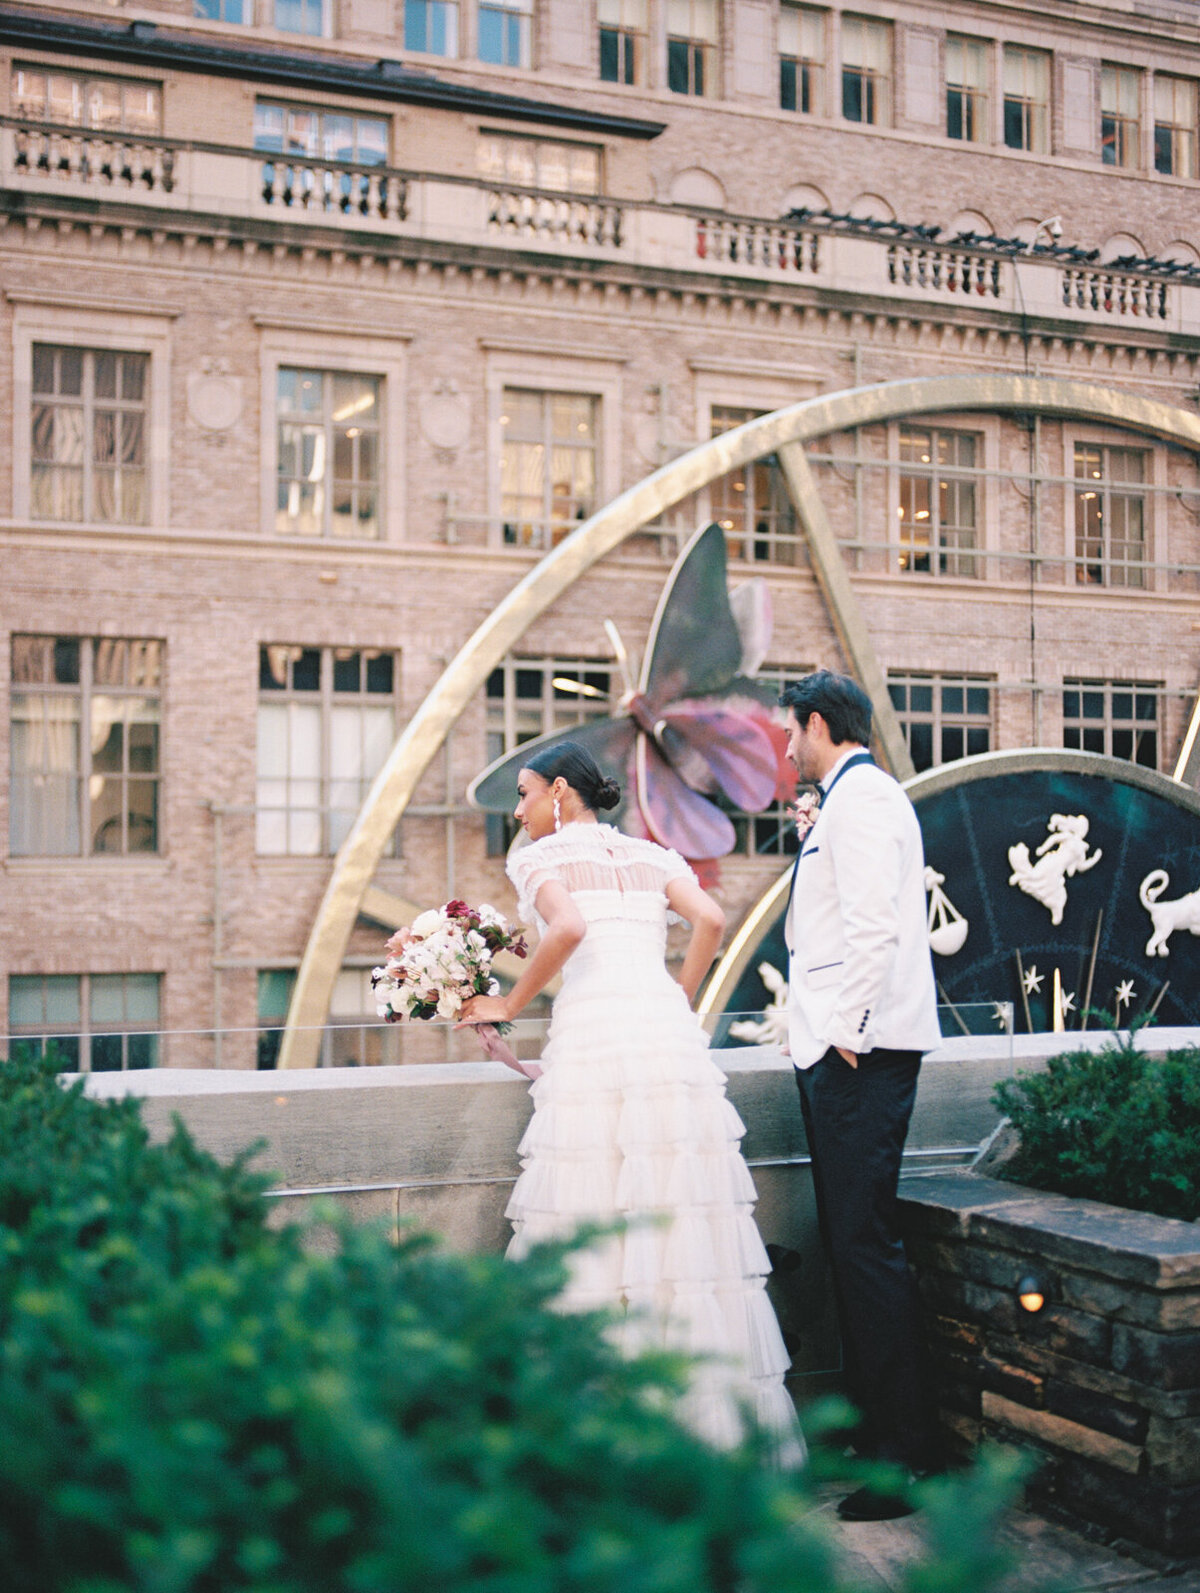 620 Loft & Garden Private Penthouse Wedding - New York City - Stephanie Michelle Photography - Britt Jones Co-126